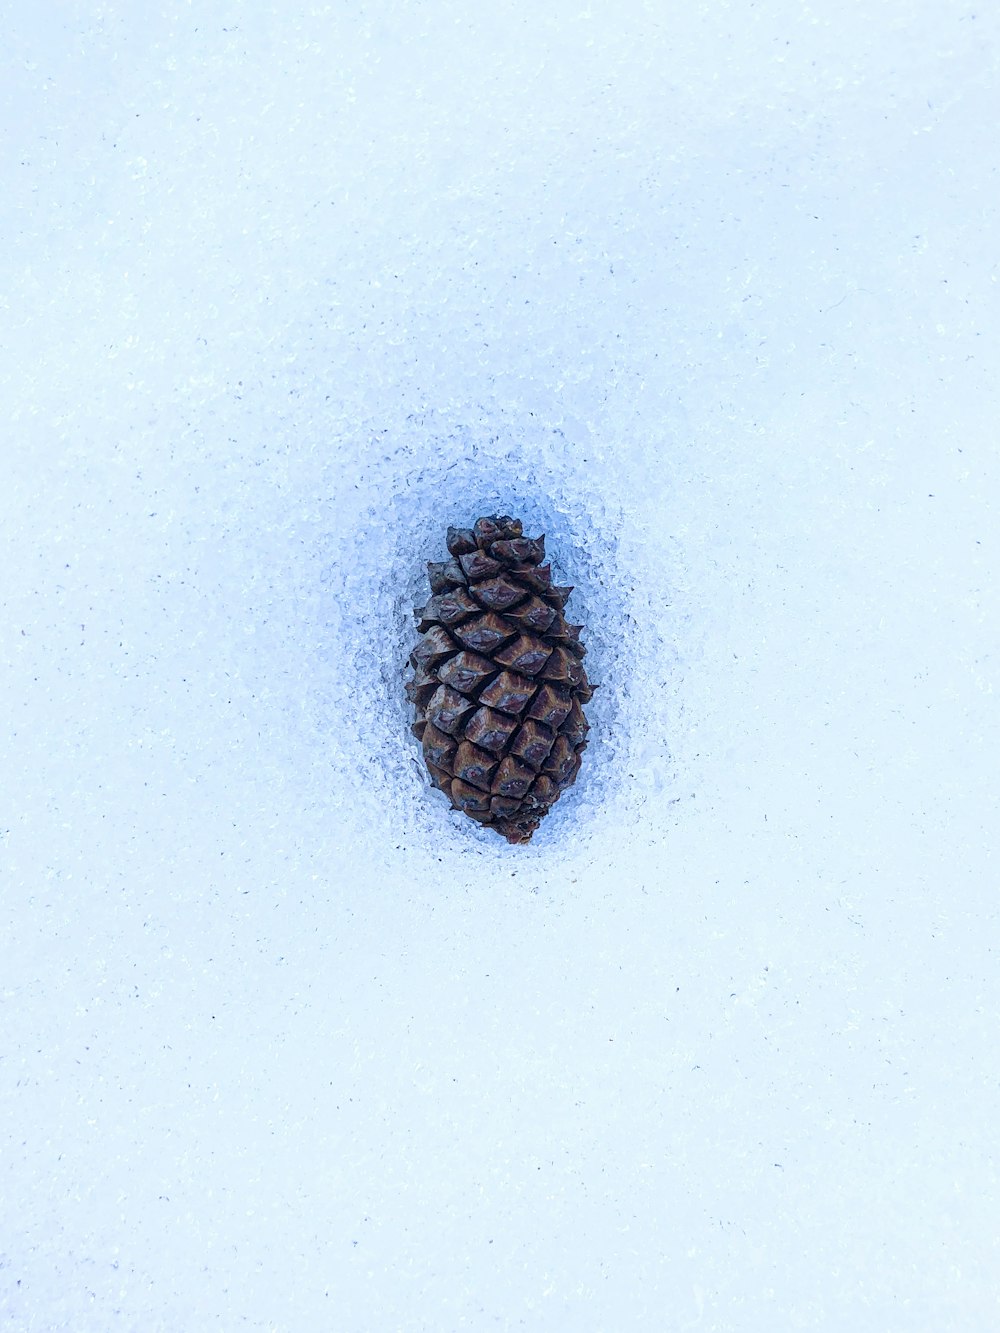 black pine cone on white snow